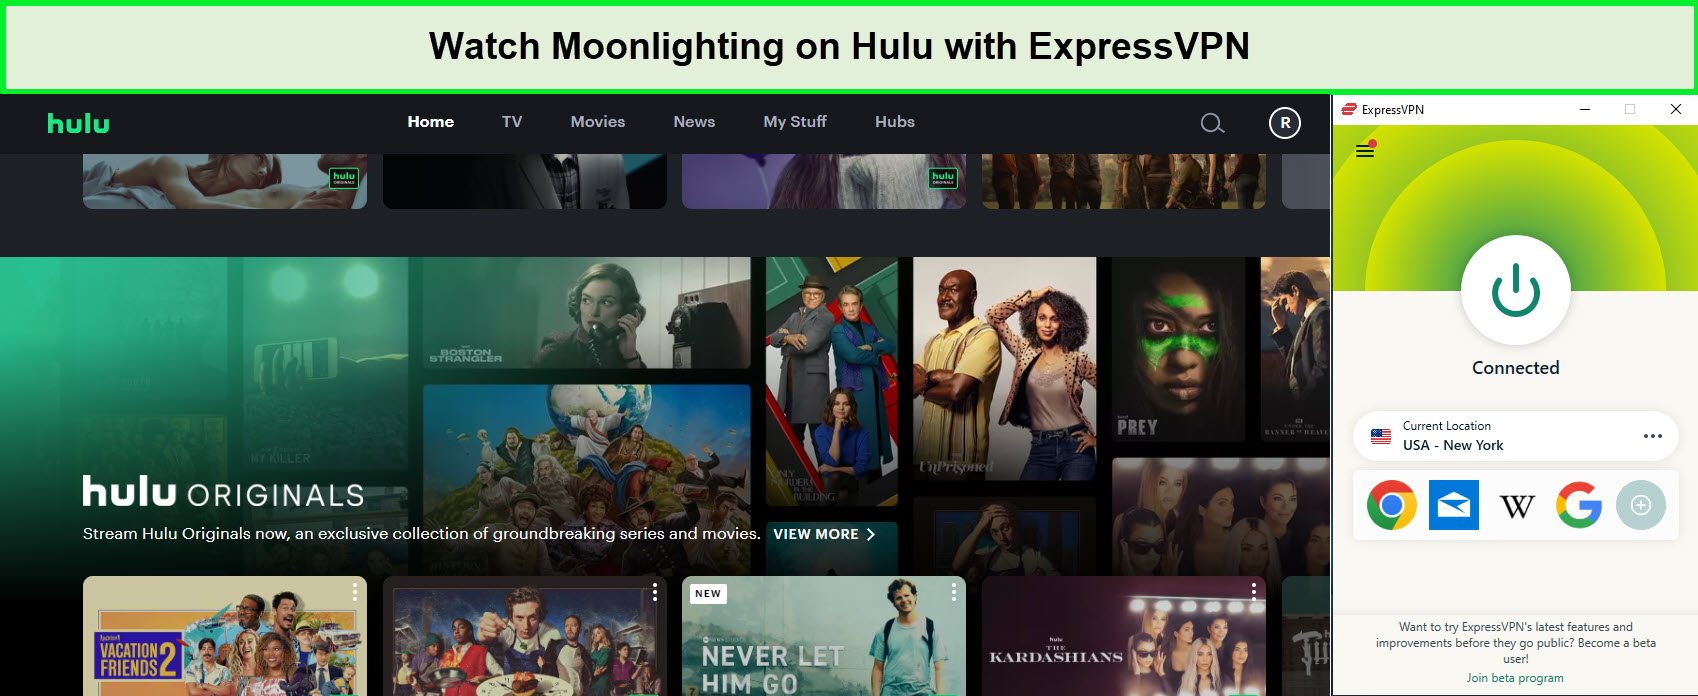 Watch-Moonlighting-outside-USA-on-Hulu-with-ExpressVPN